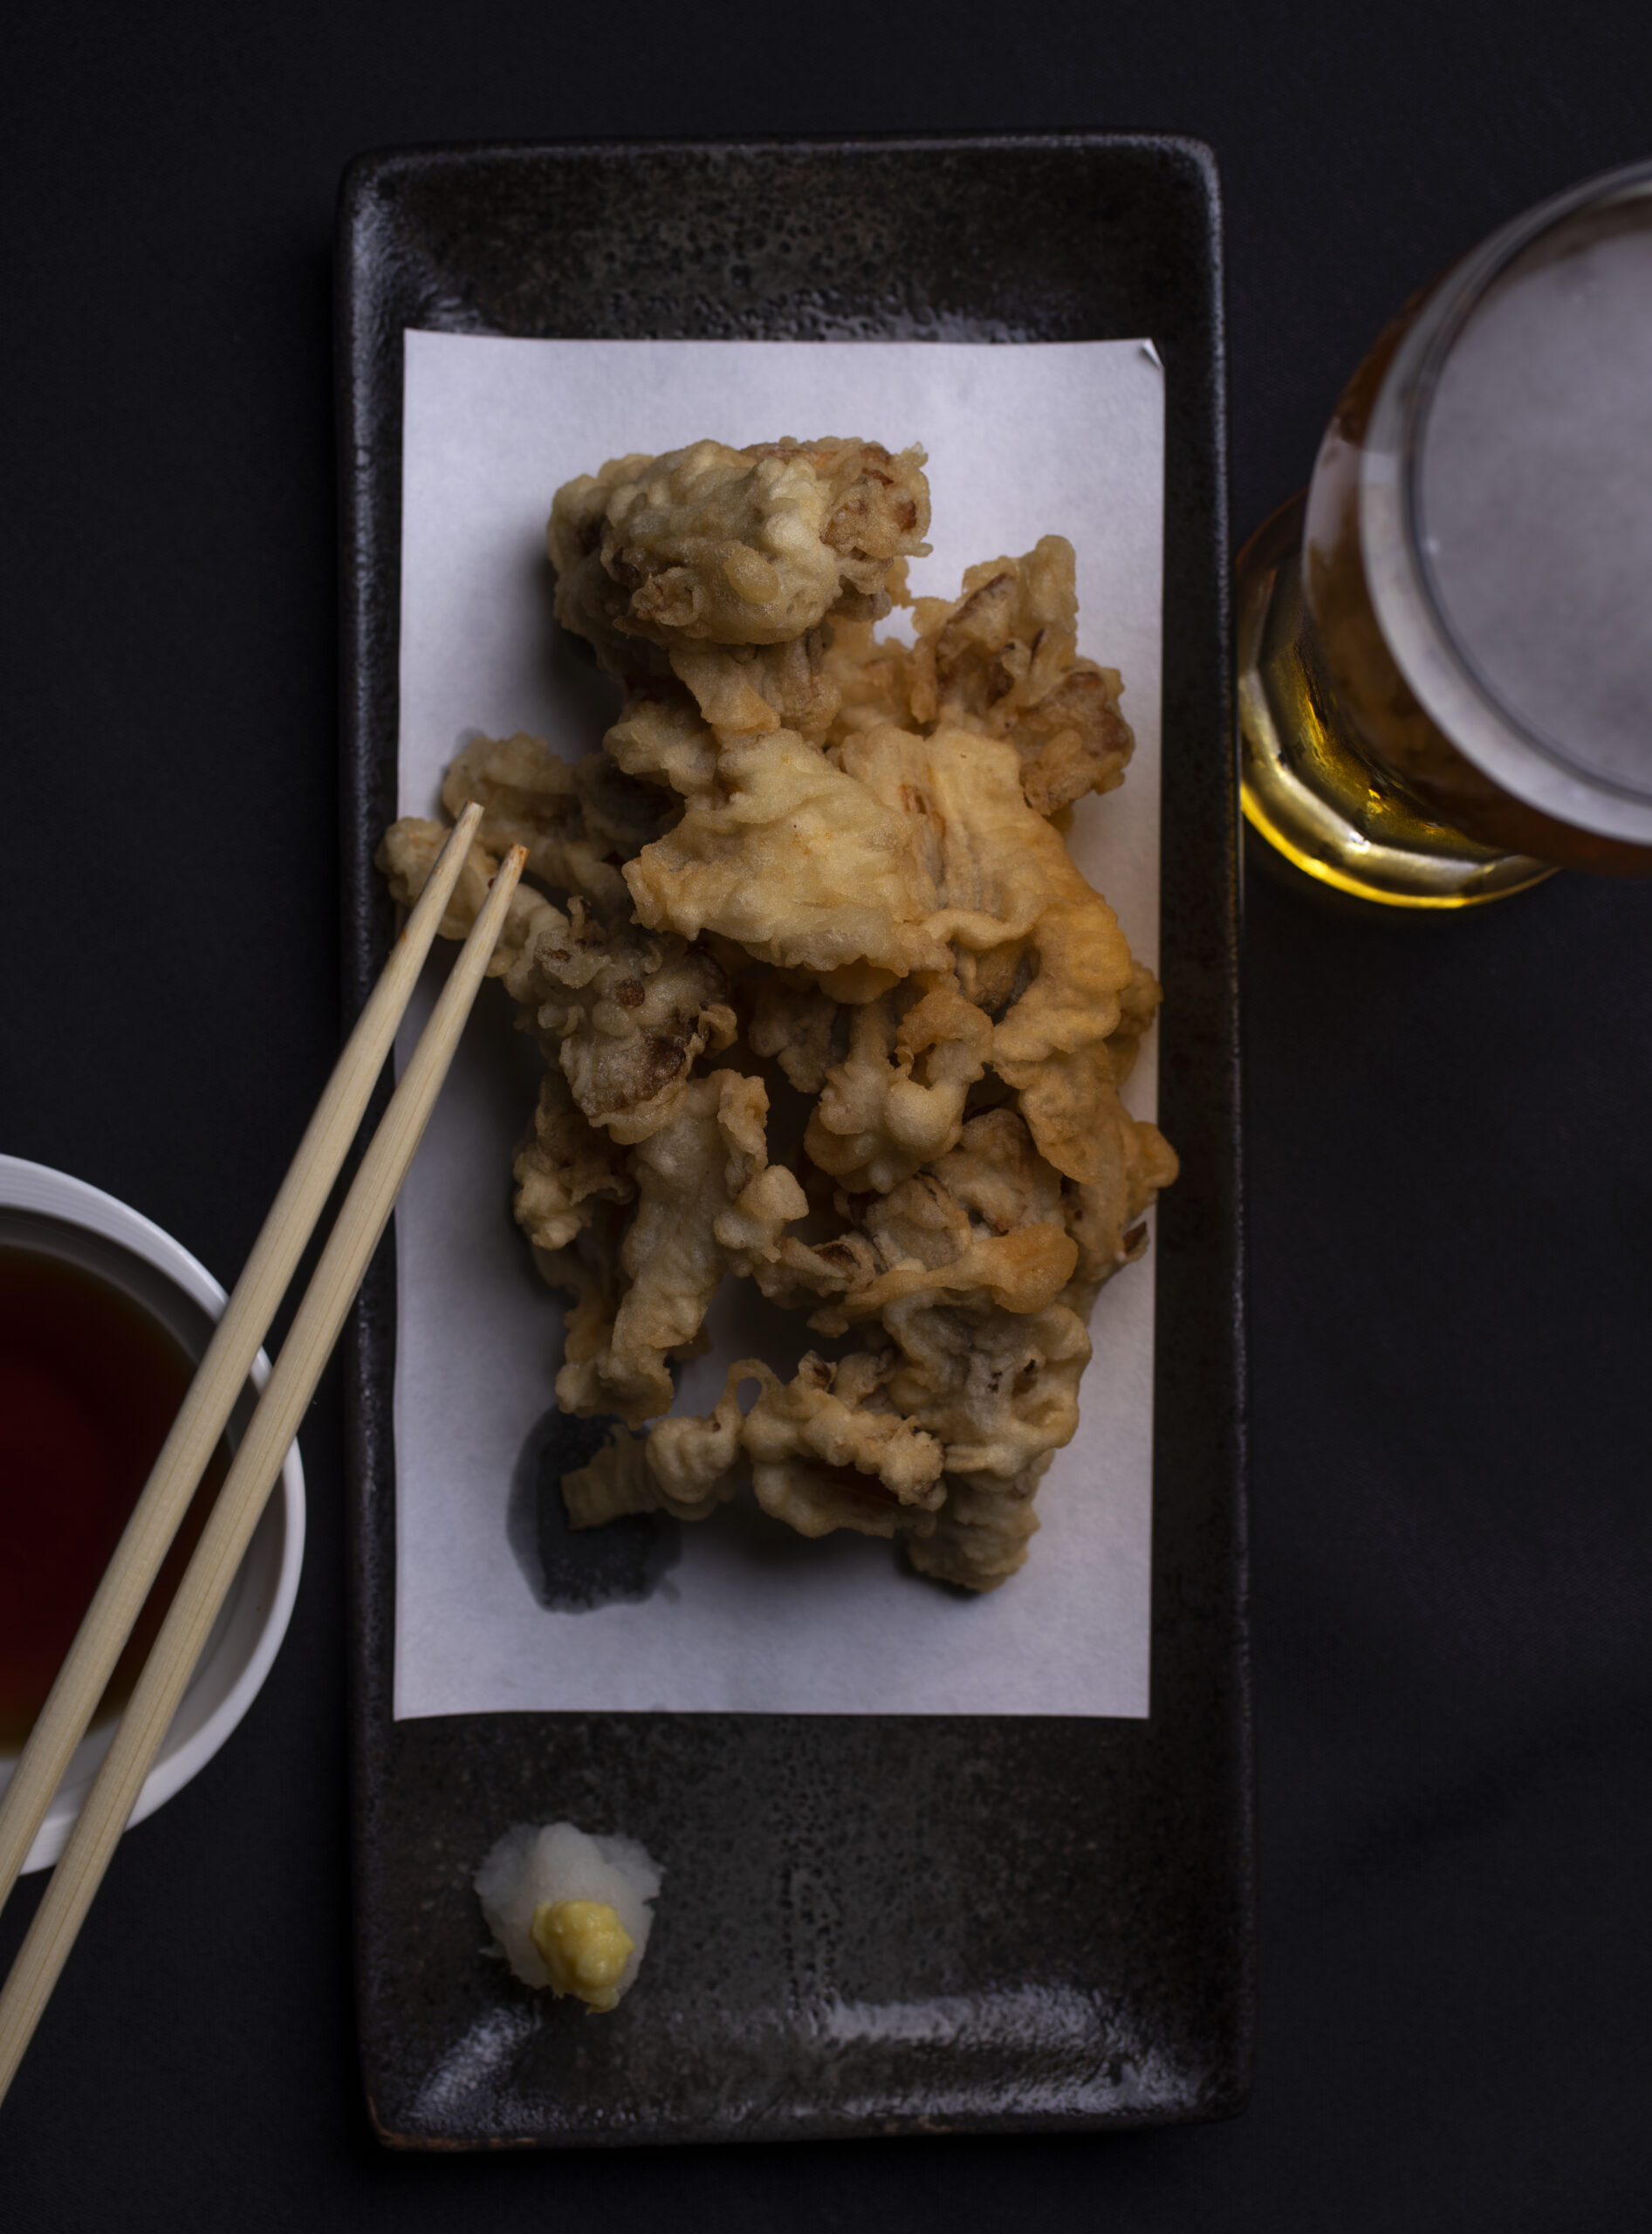 Maitake mushroom tempura at Hanna Japanese Restaurant in Rohnert Park September 21, 2022. (Chad Surmick / The Press Democrat)